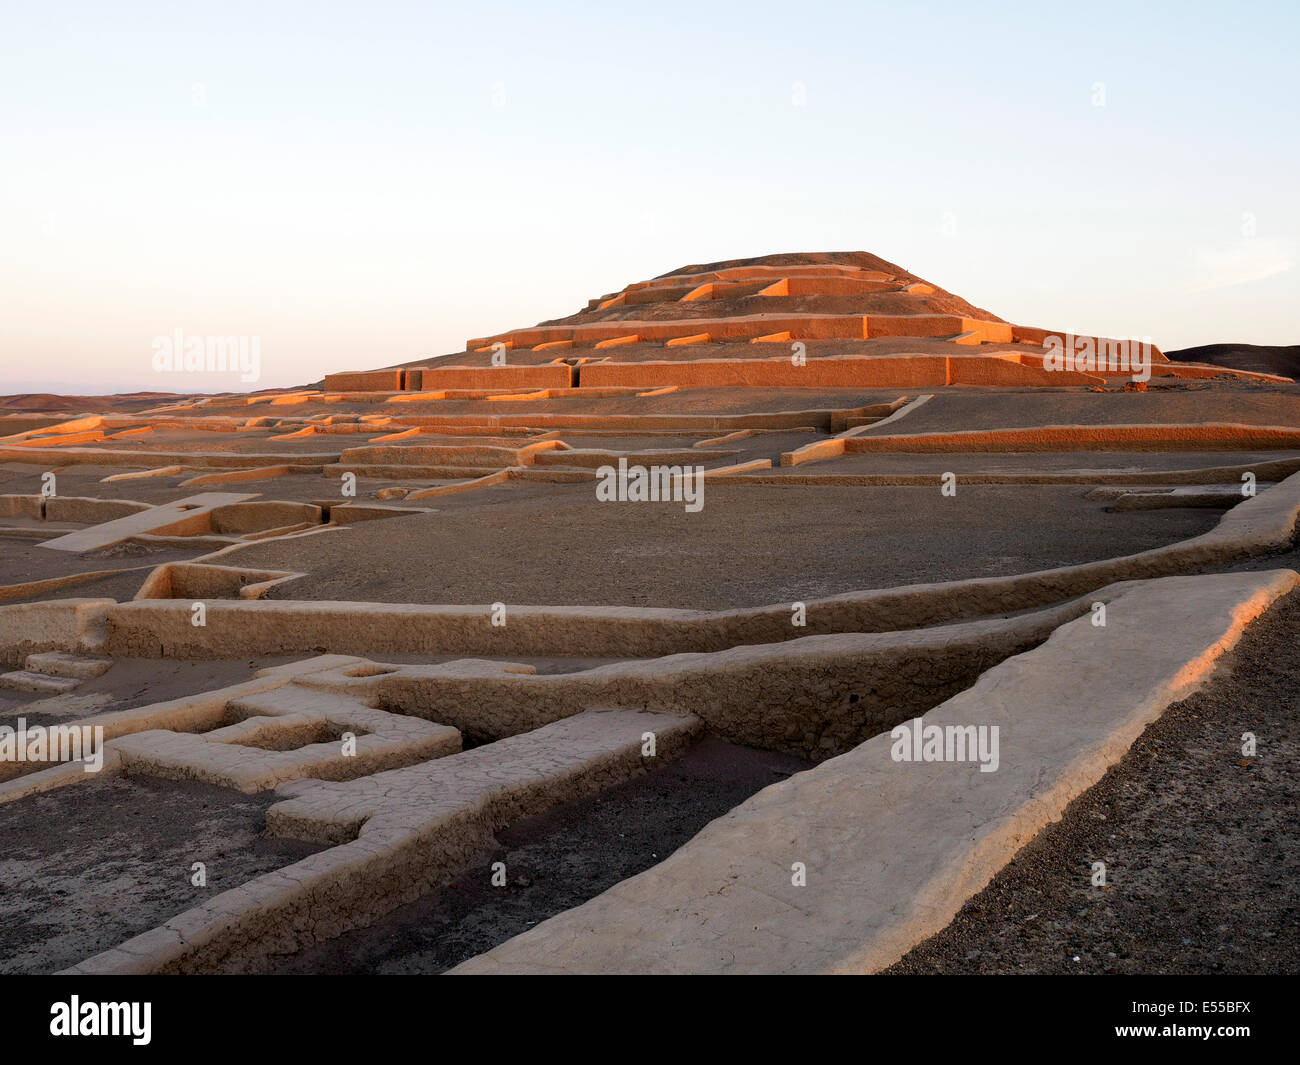 Adobe pyramid in the Cahuachi ceremonial center of the Nazca culture - Nazca, Peru. Stock Photo